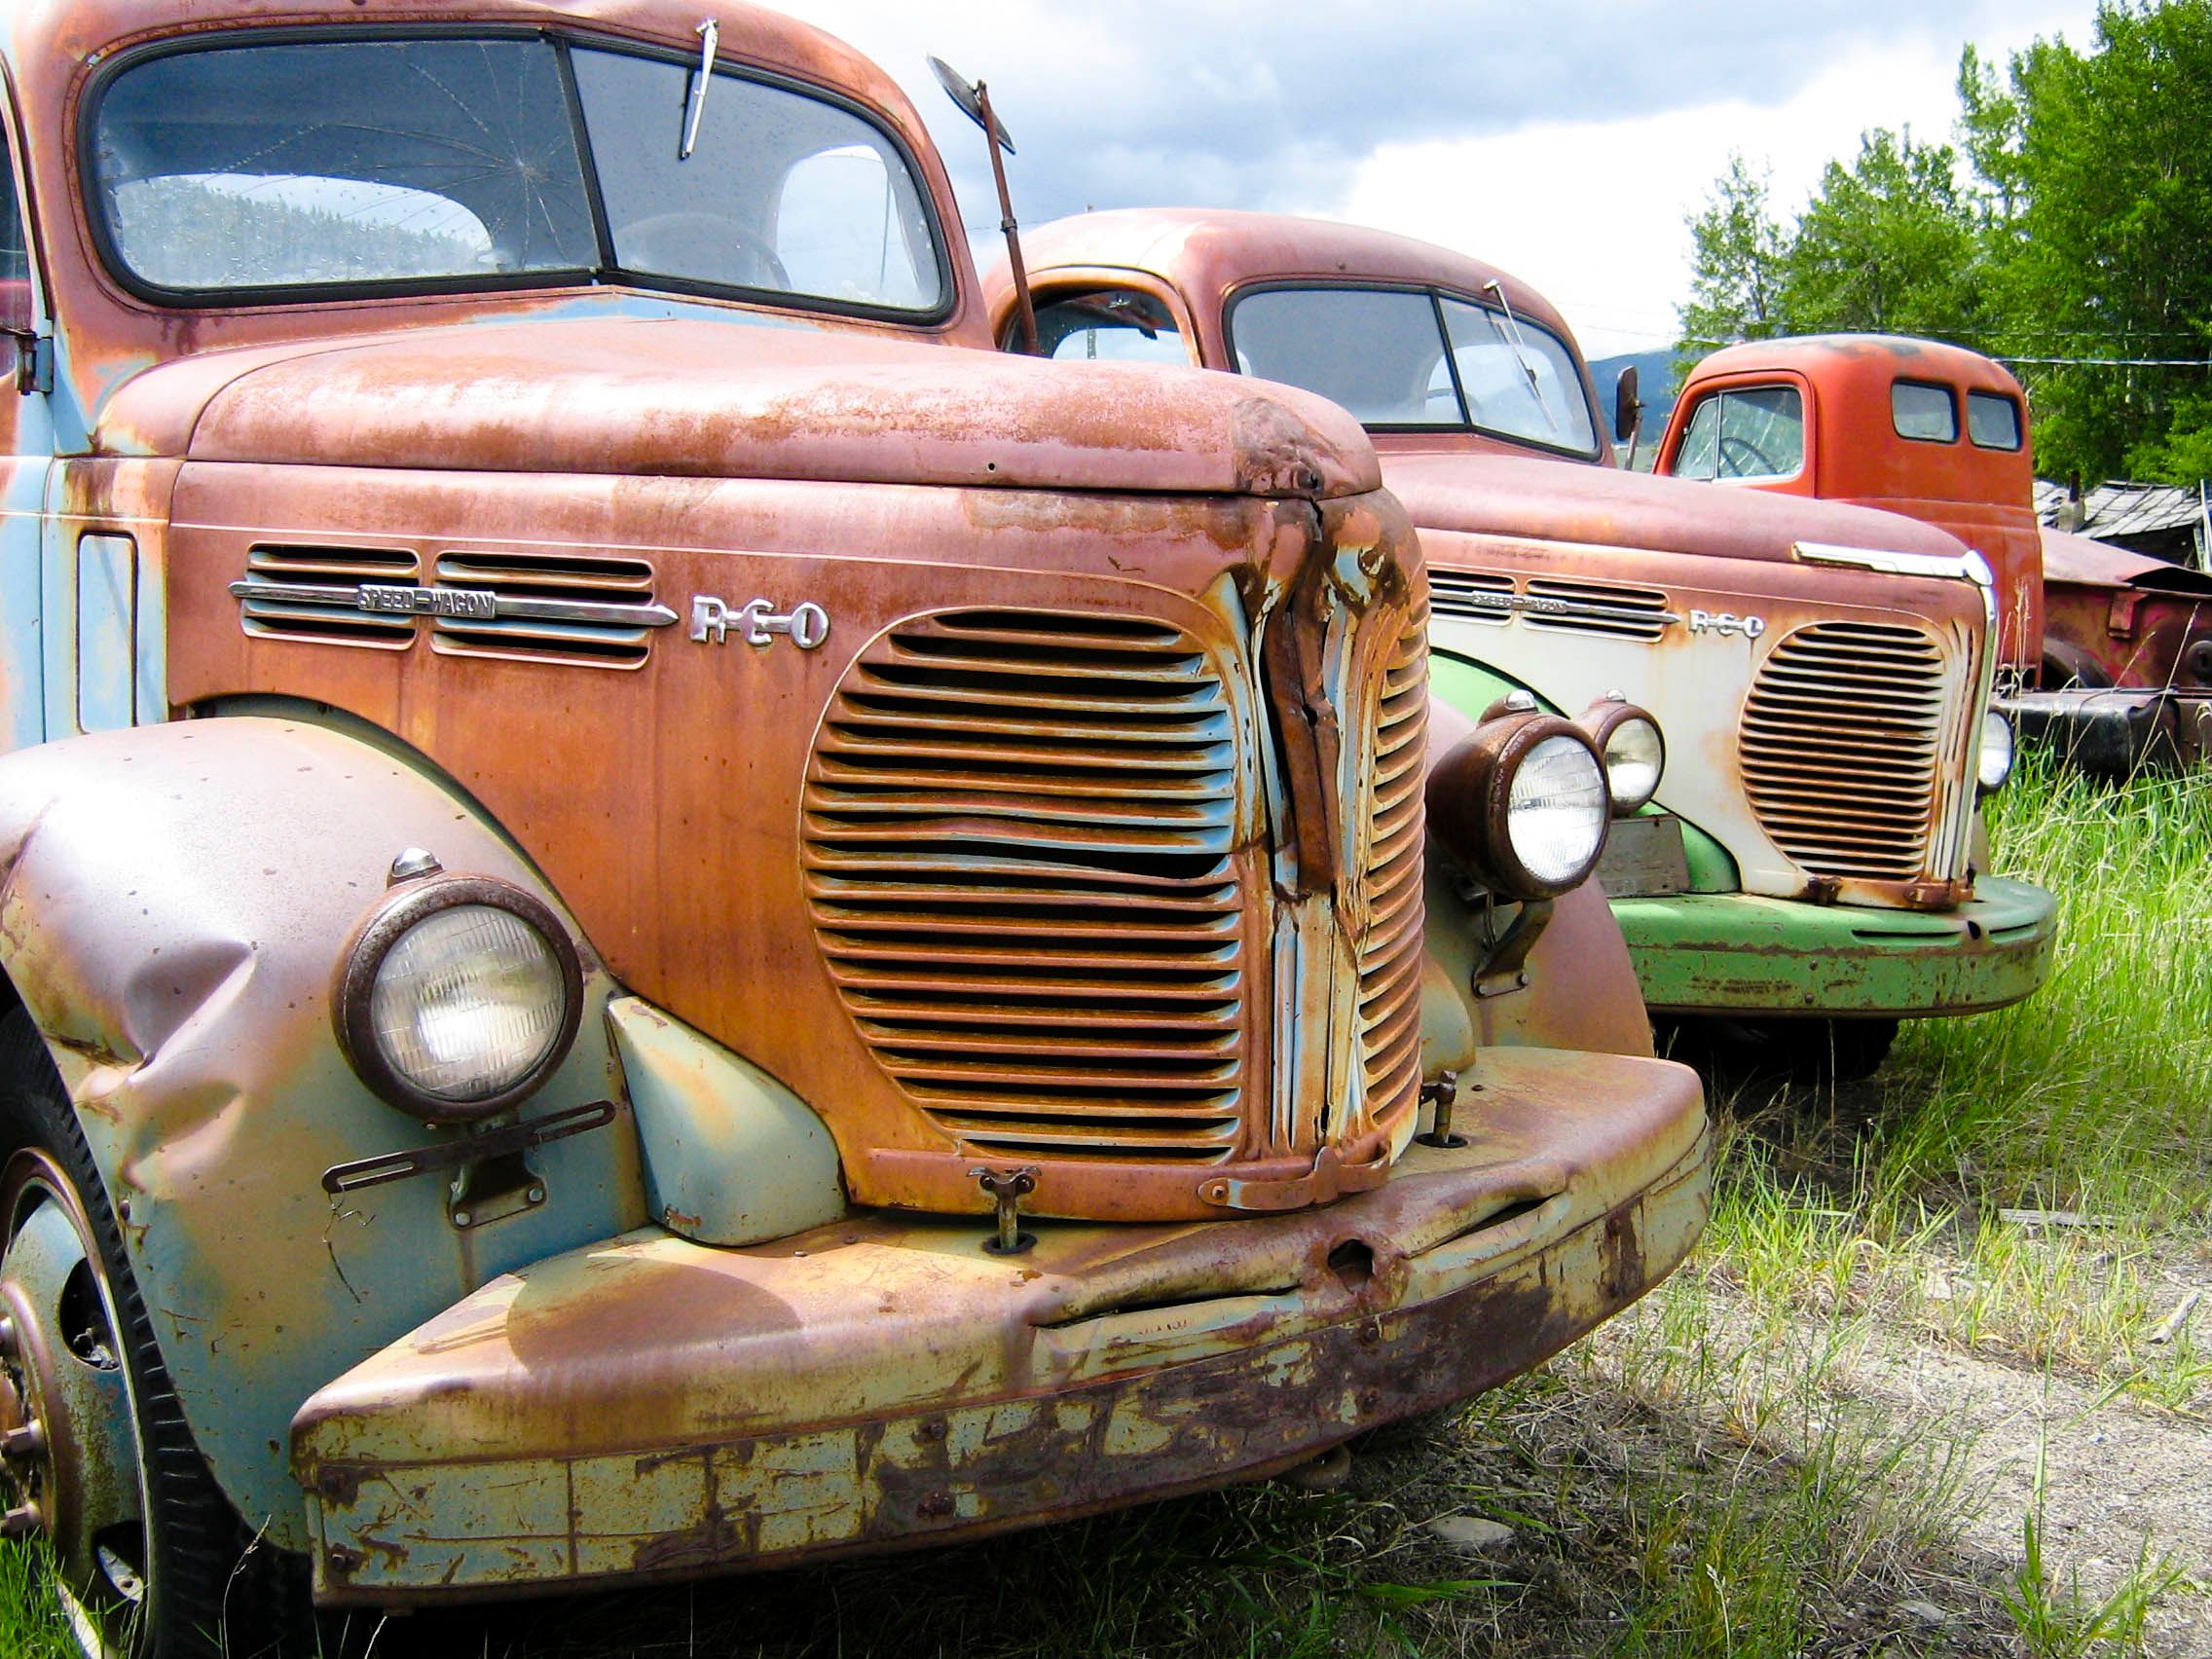 Vintage REO Speedwagon trucks rusting in junkyard